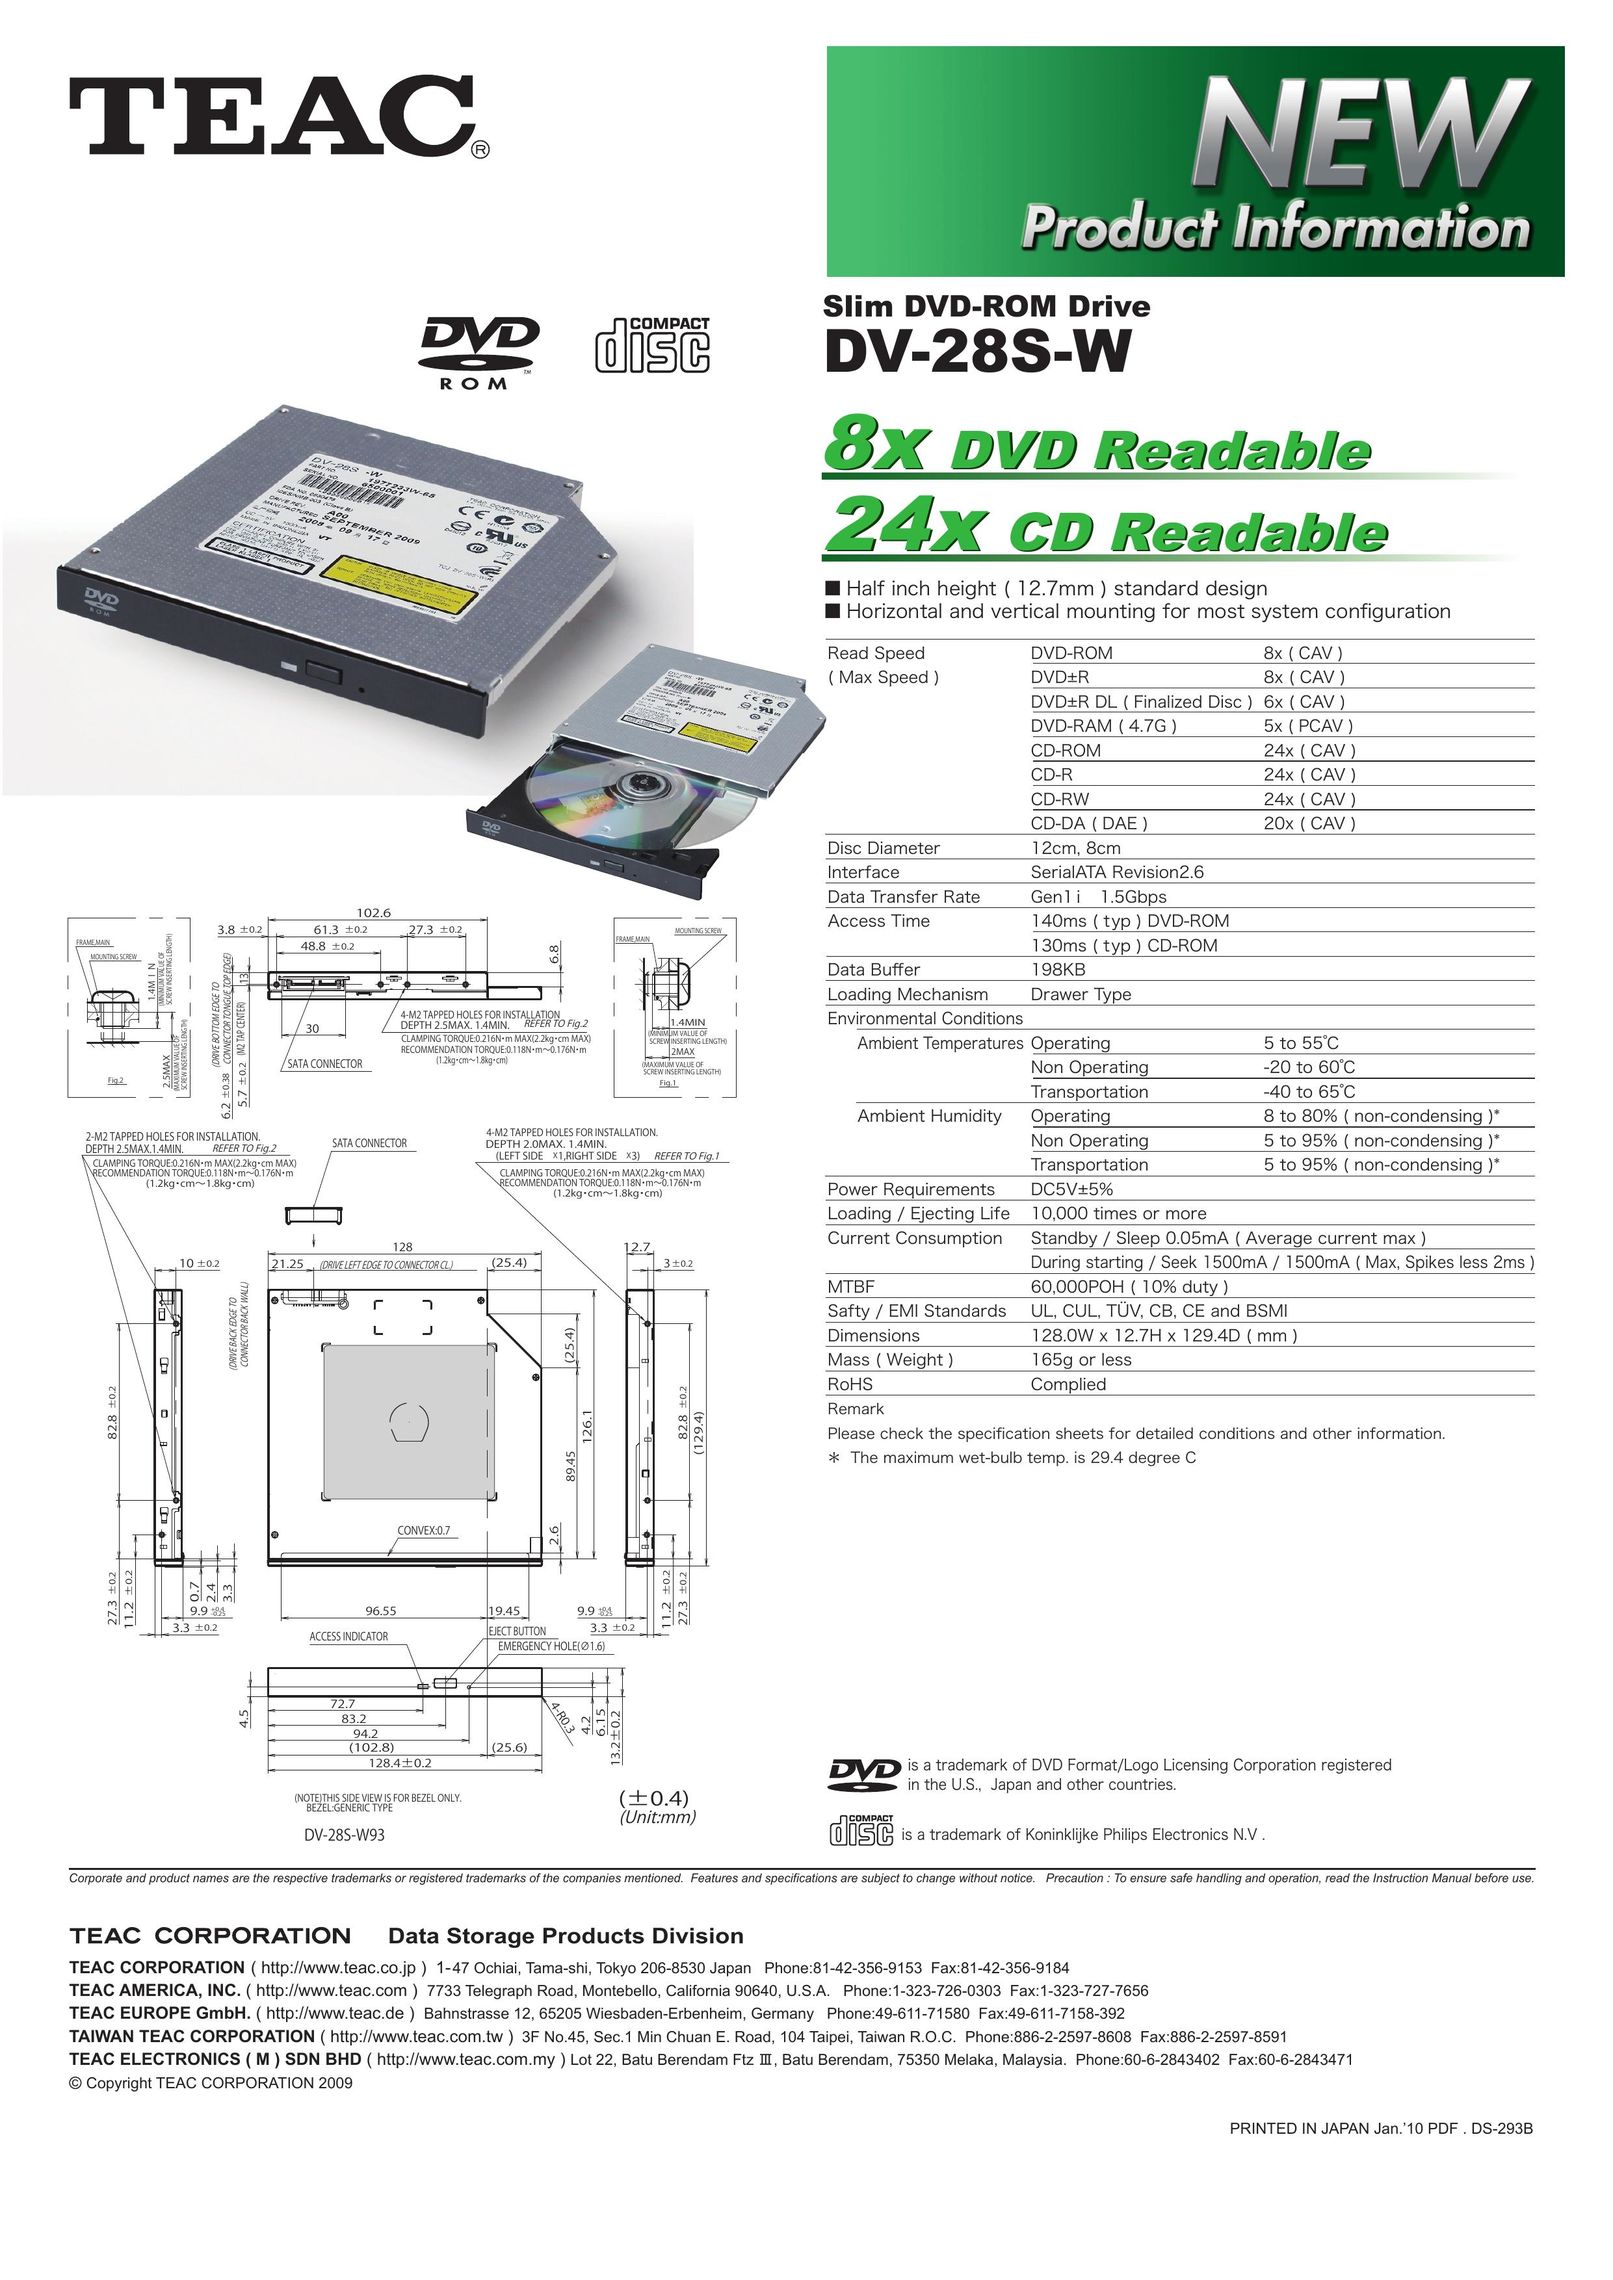 Teac DV-28S-W DVD Player User Manual